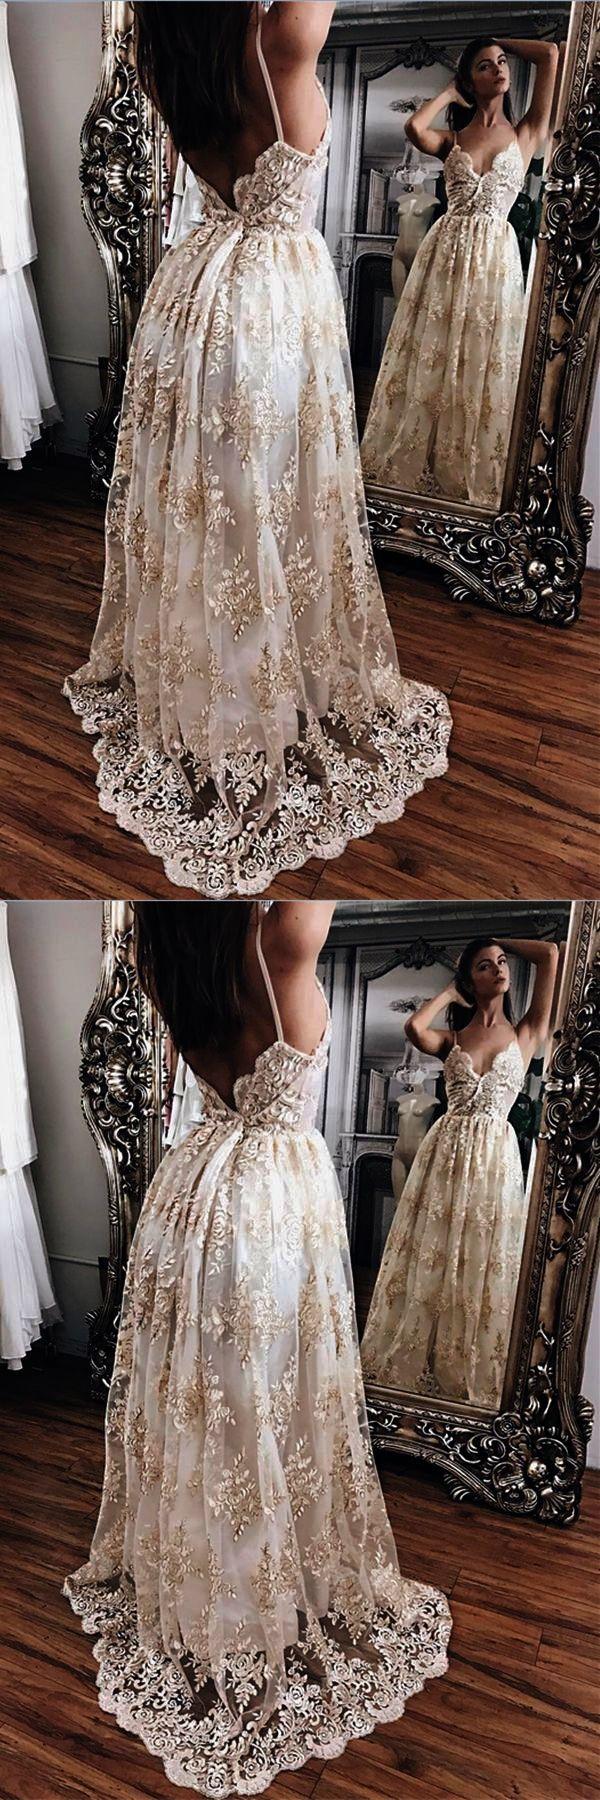 Hochzeit - Trendy - Most Beautiful Lace Wedding Dresses :-) 